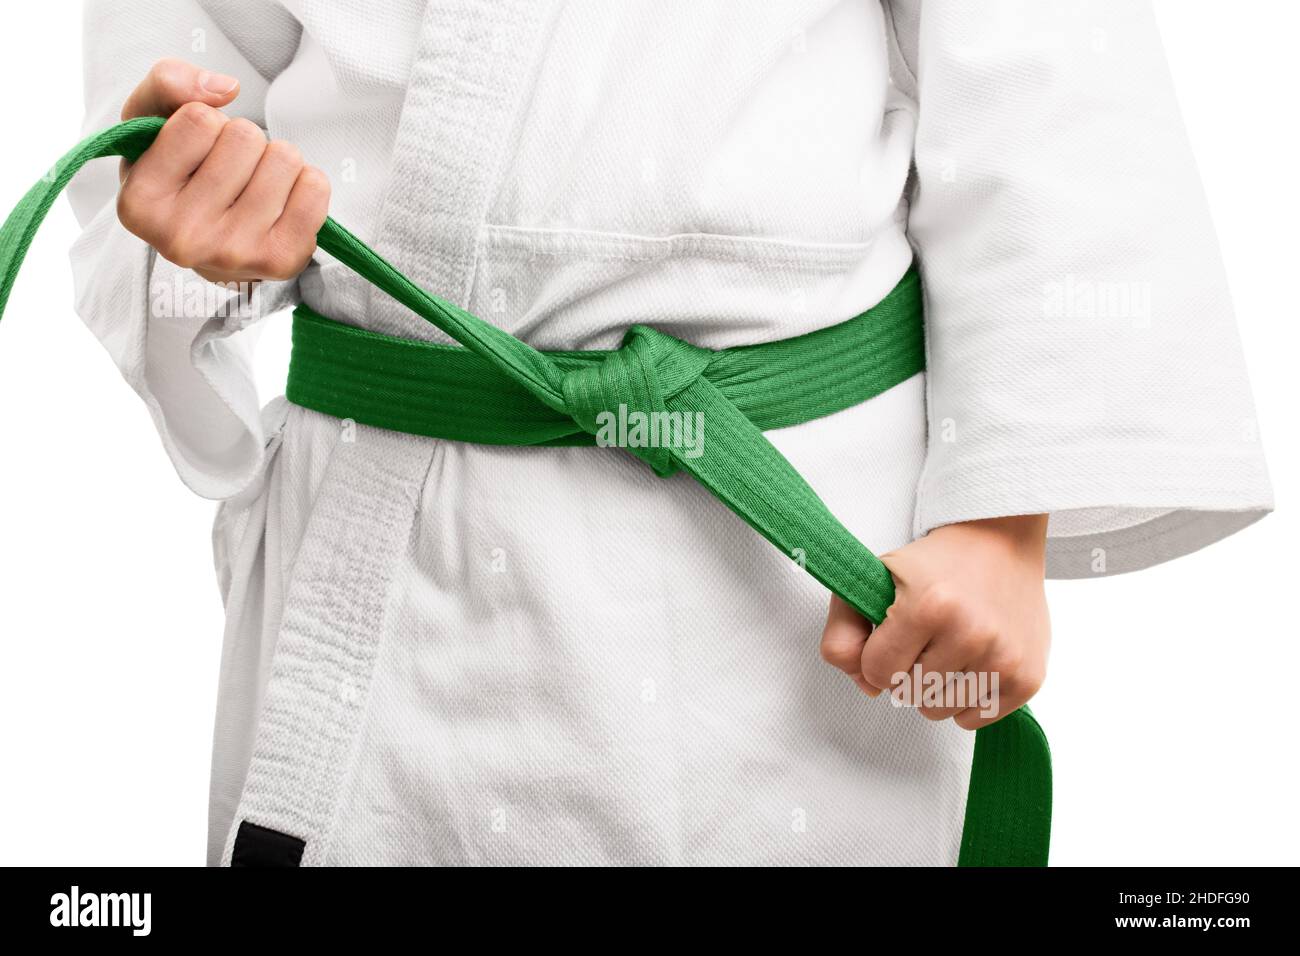 Taekwondo Gürtel Stockfotos und -bilder Kaufen - Alamy